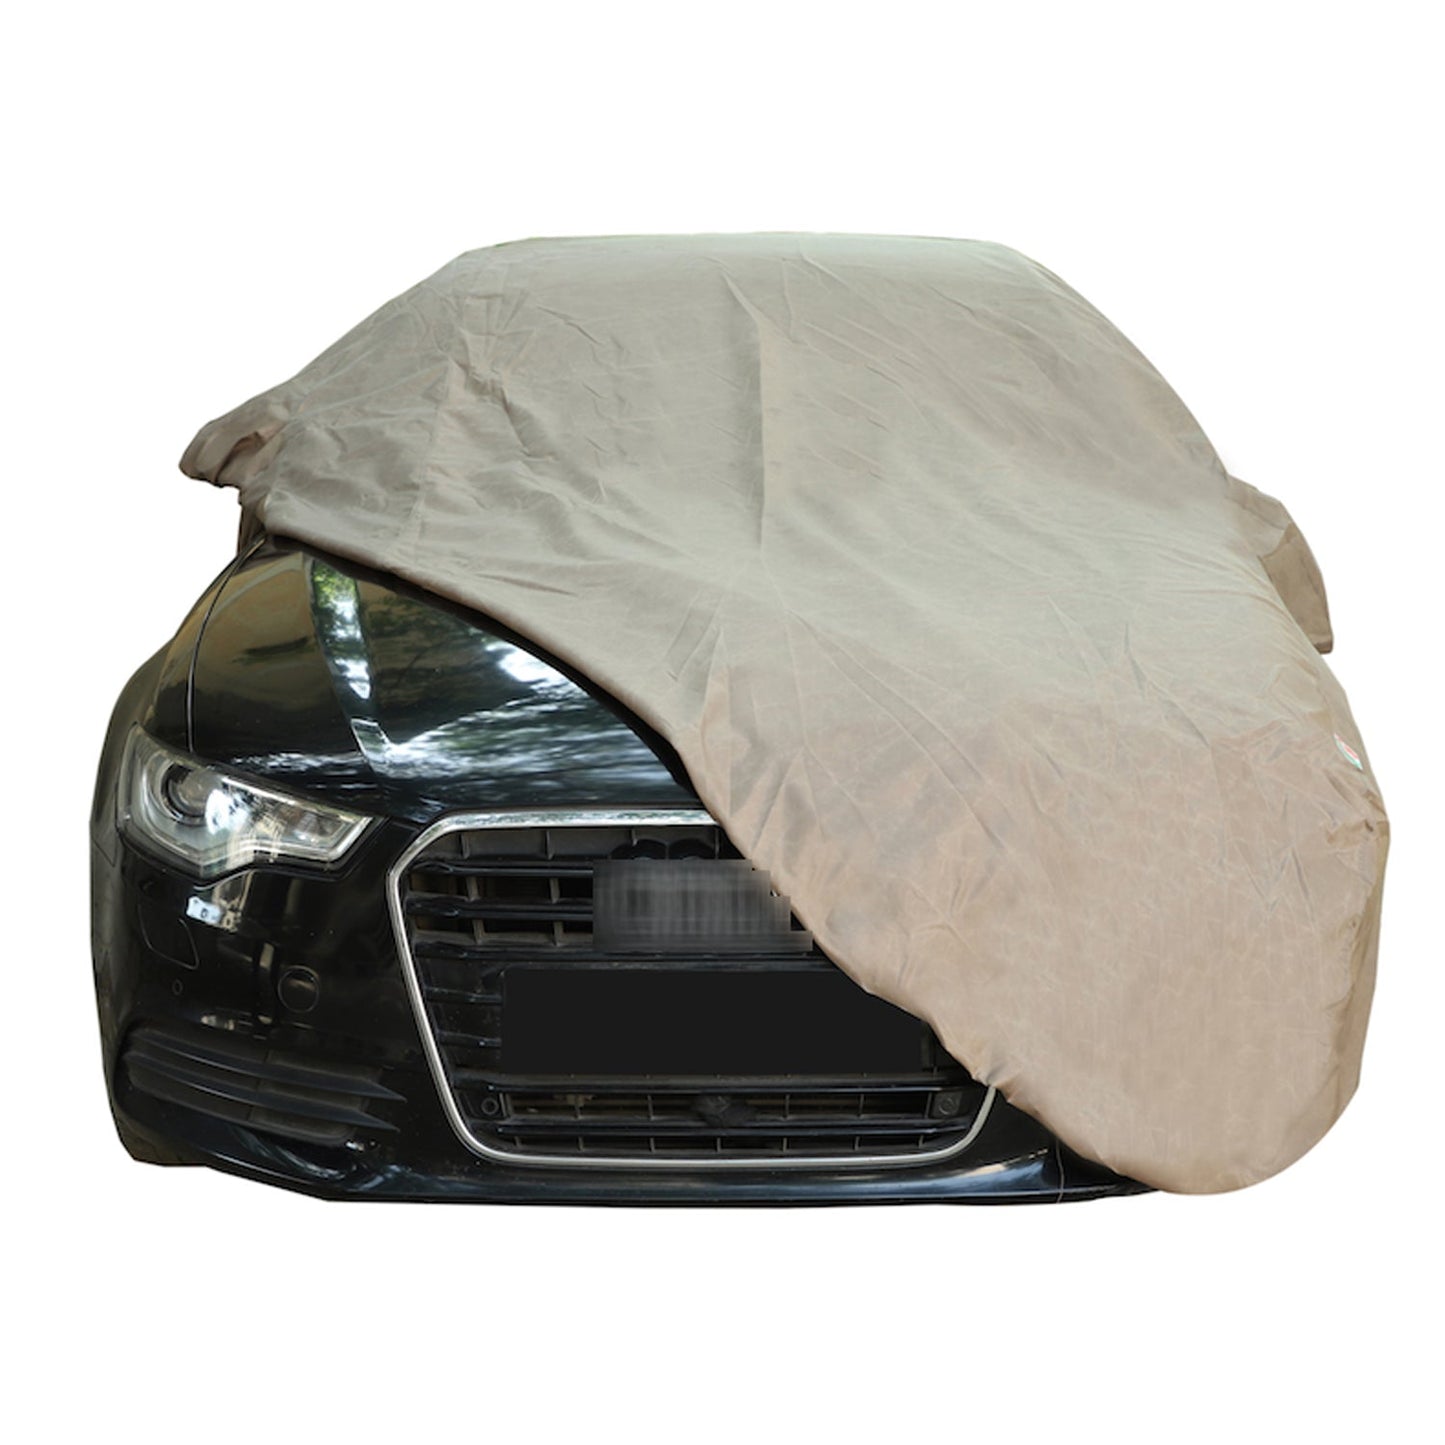 Oshotto Brown 100% Waterproof Car Body Cover with Mirror Pockets For Mahindra Verito/Verito Vibe